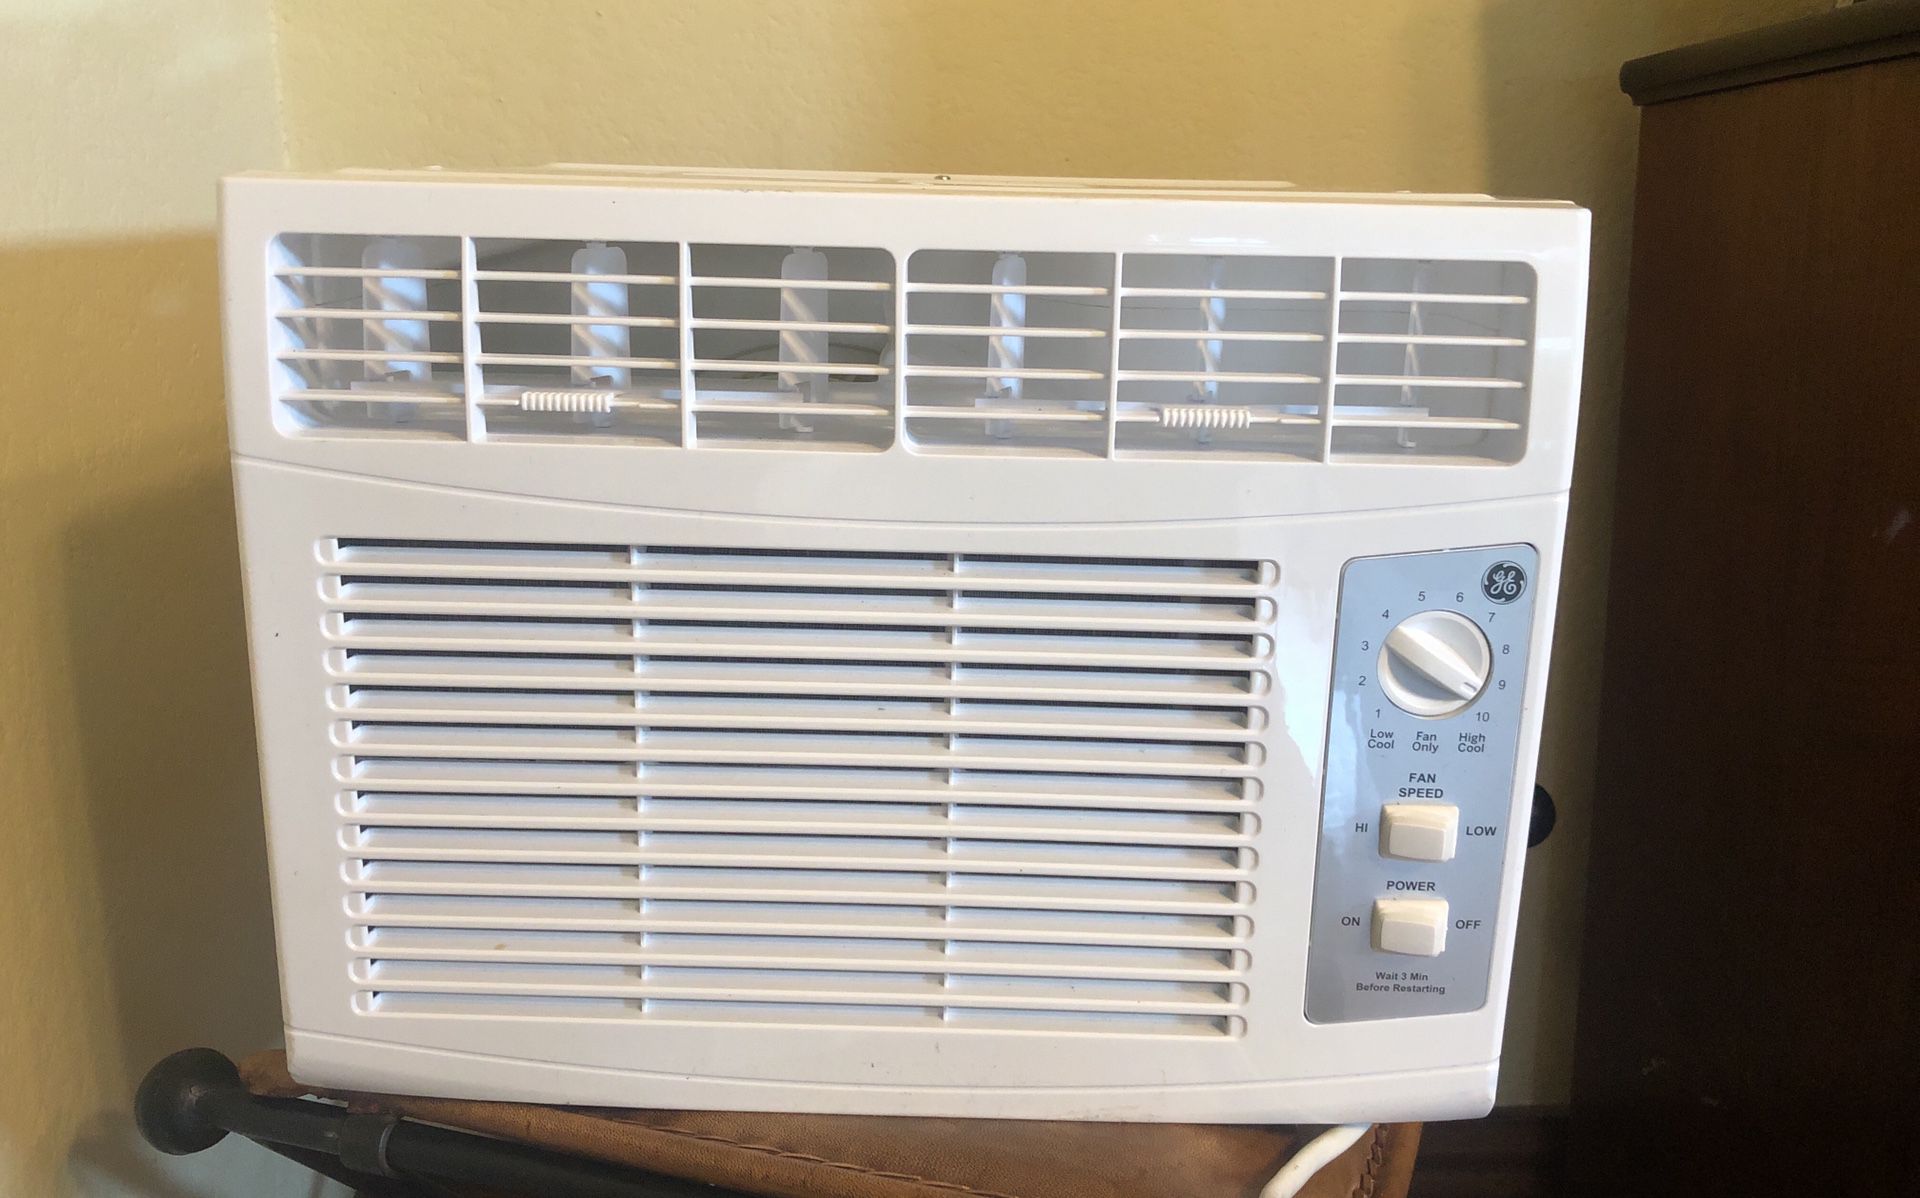 GE appliances air conditioner